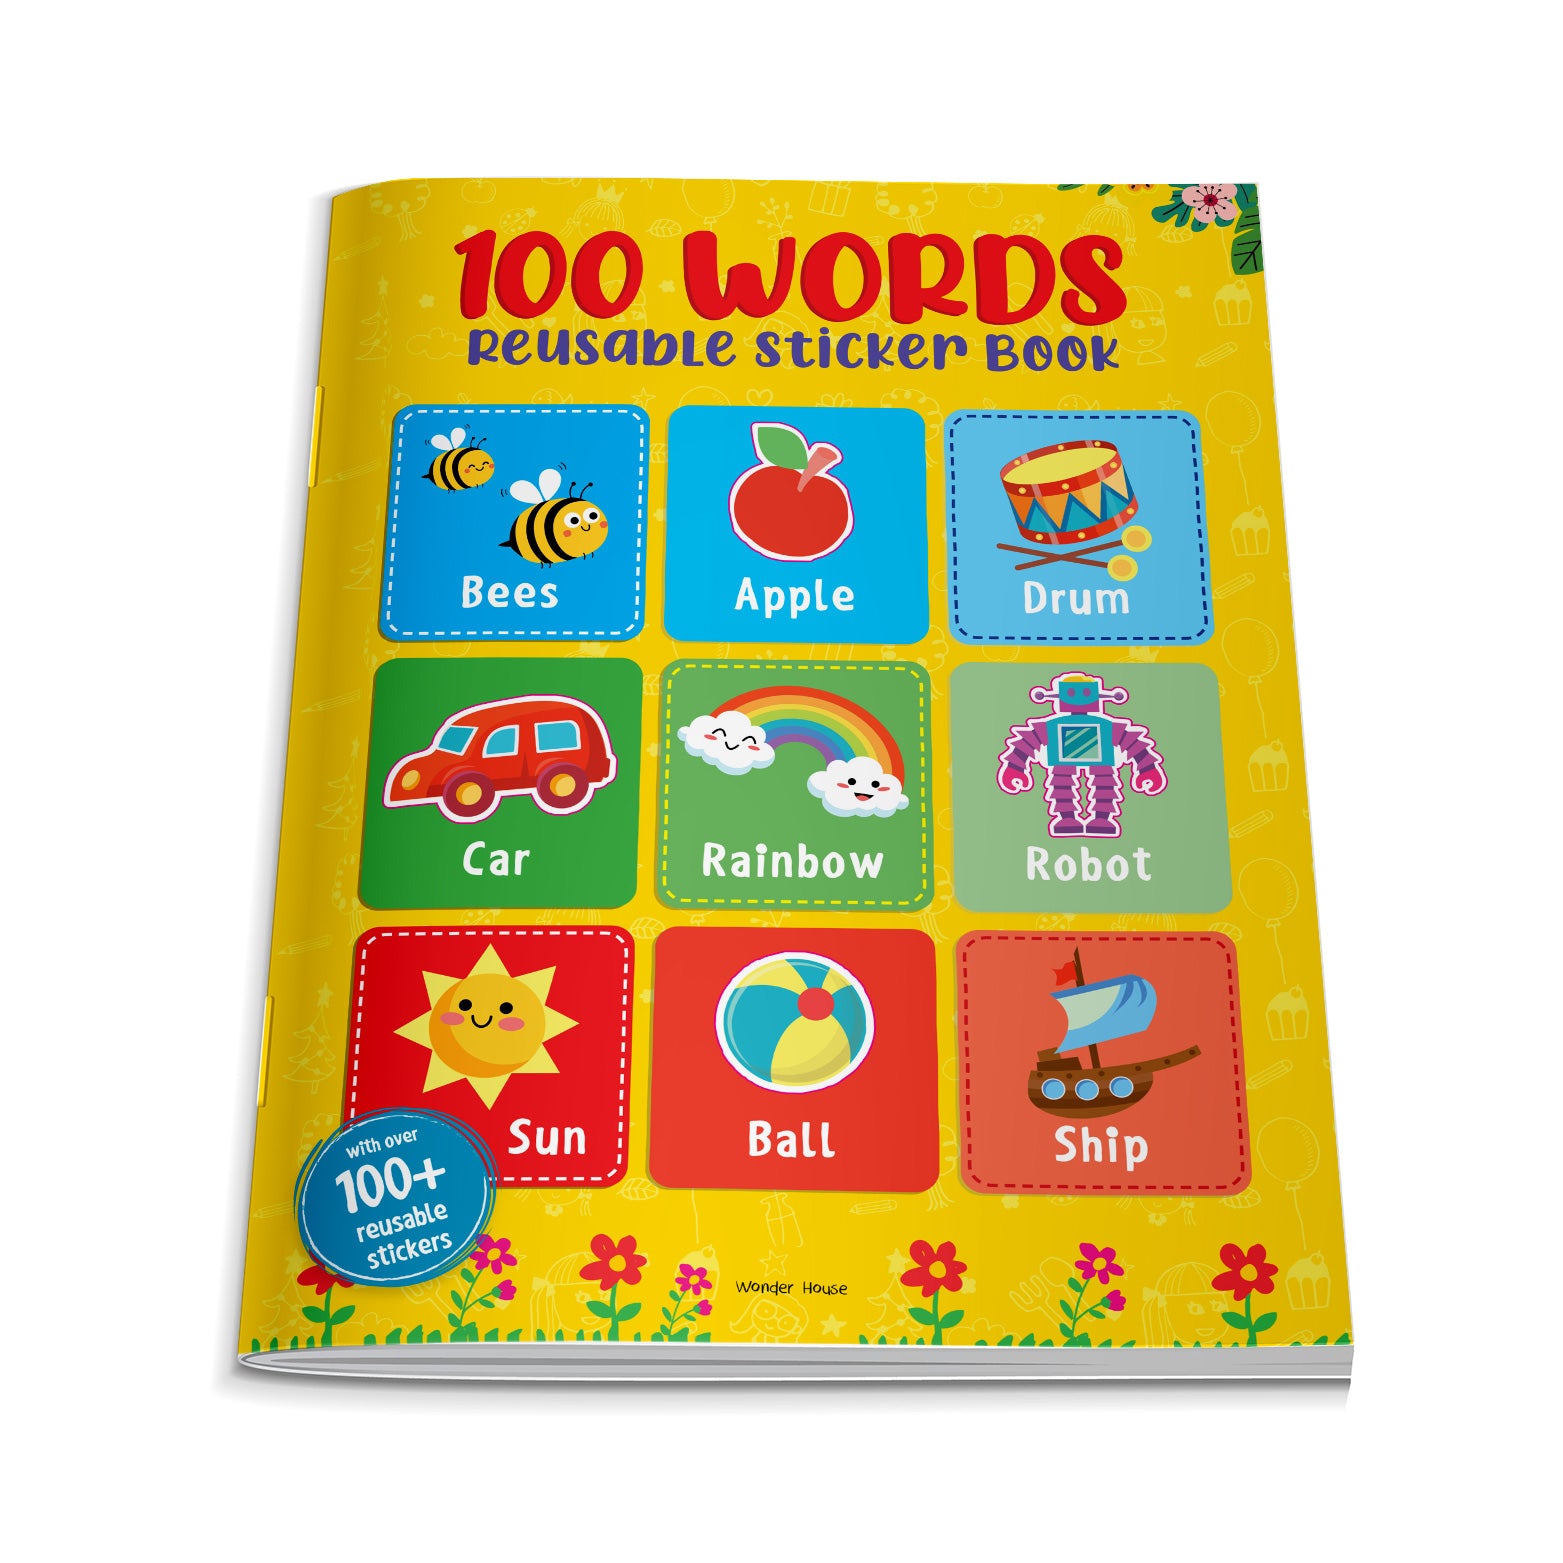 100 Words Reusable Sticker BookFor Children